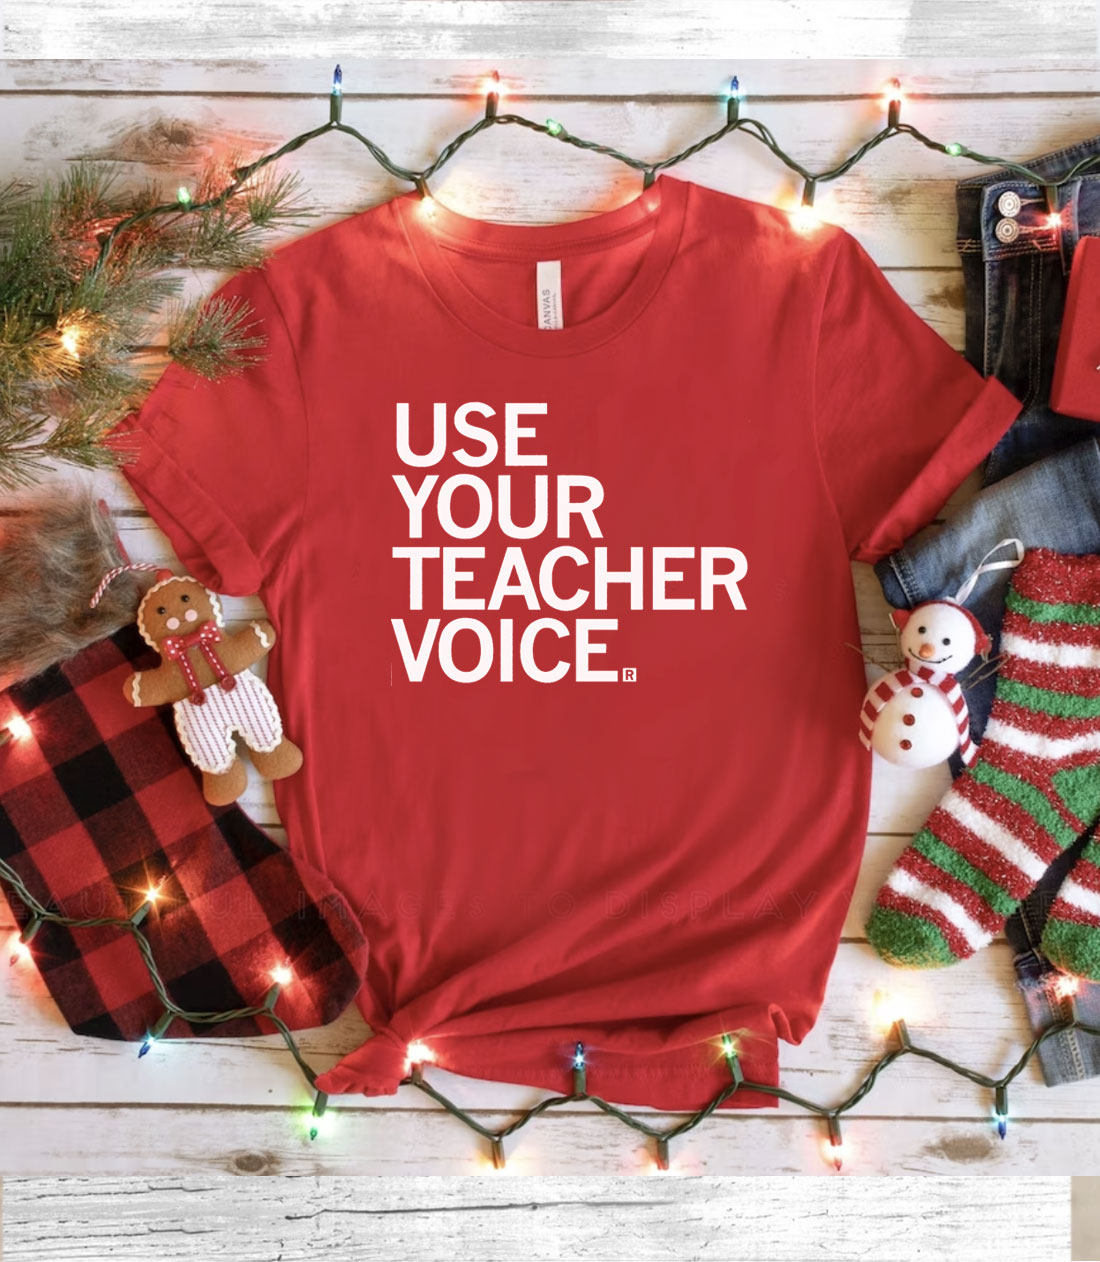 Use your teacher voice T-Shirts